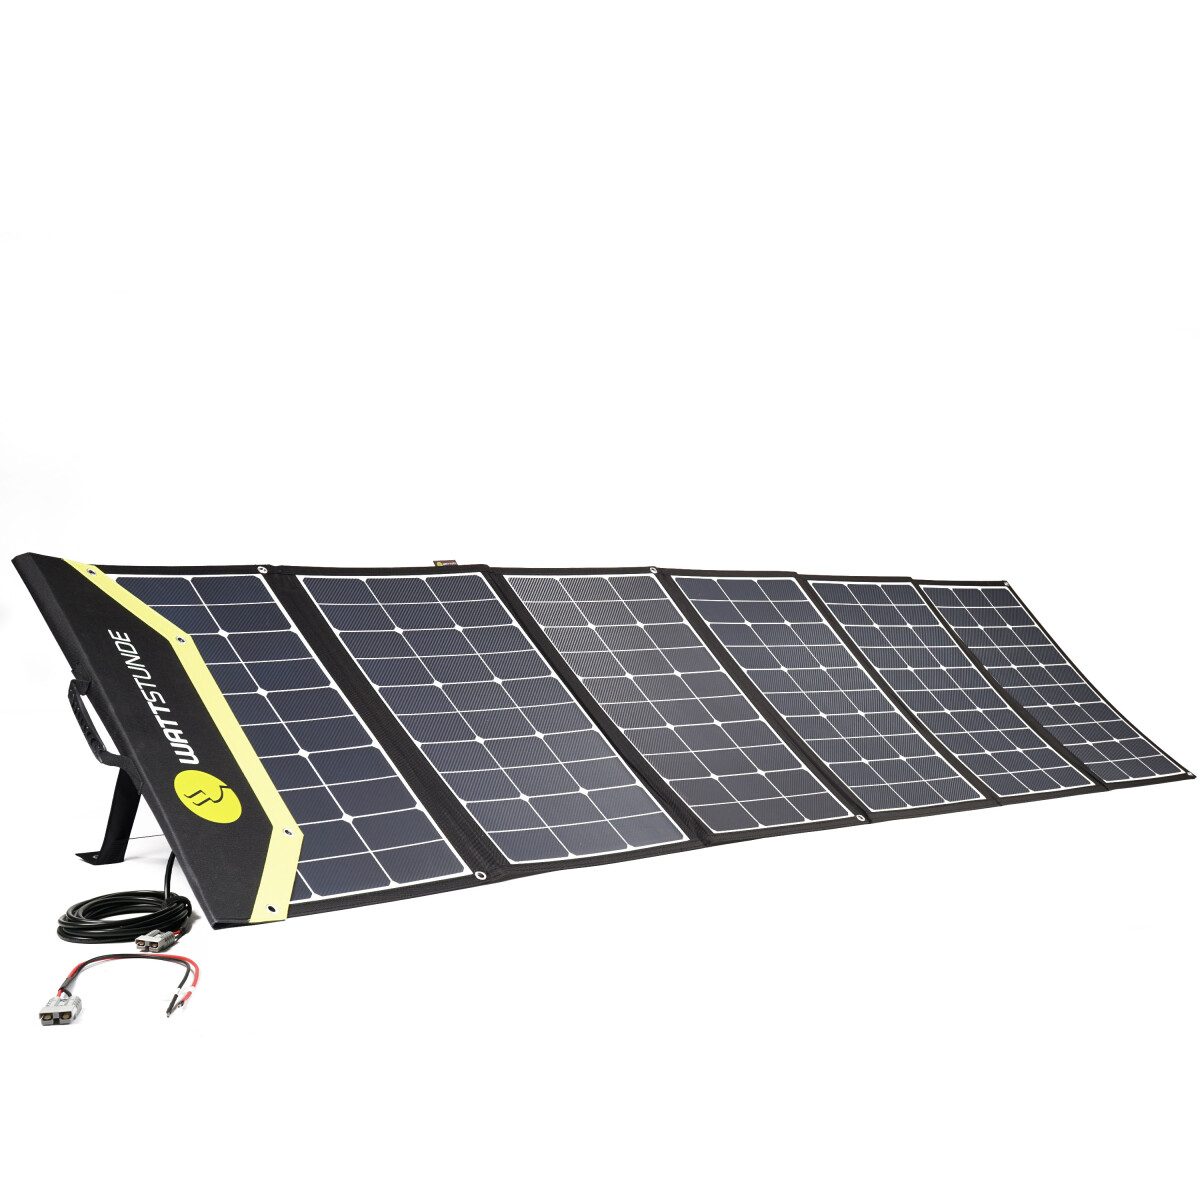 https://solarkontor.de/media/image/product/7826/lg/wattstunde-ws340sf-sunfolder-340wp-solartasche.jpg